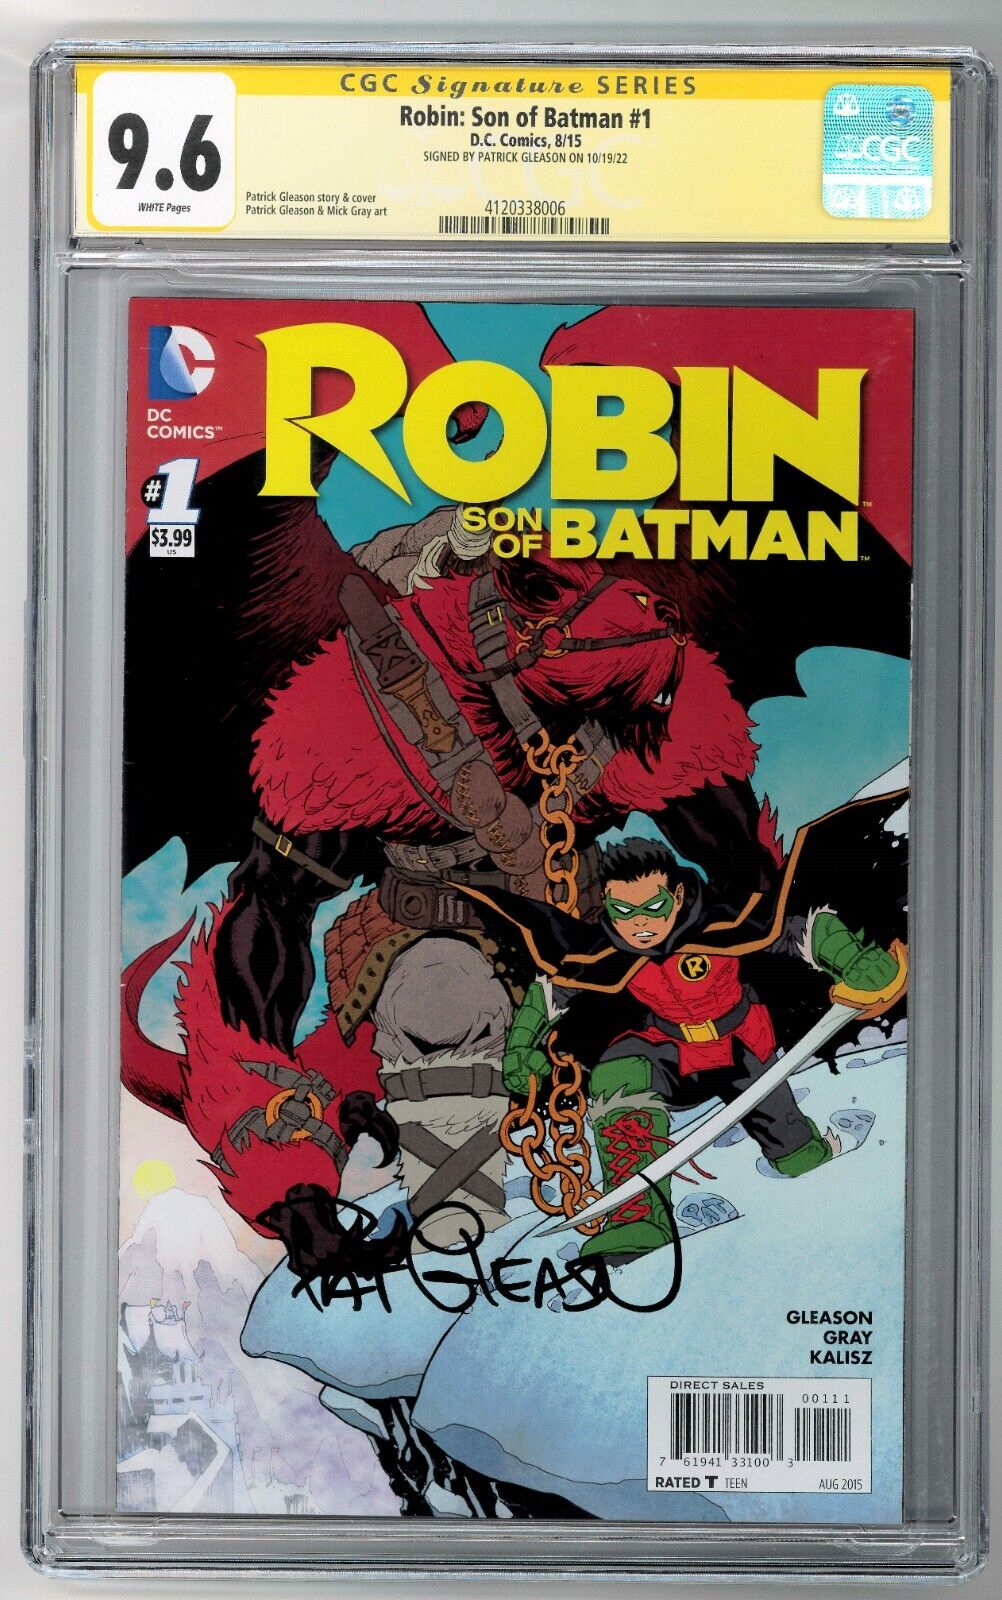 Robin: Son of Batman #1 CGC SS 9.6 (Aug 2015, DC) Signed by Patrick Gleason